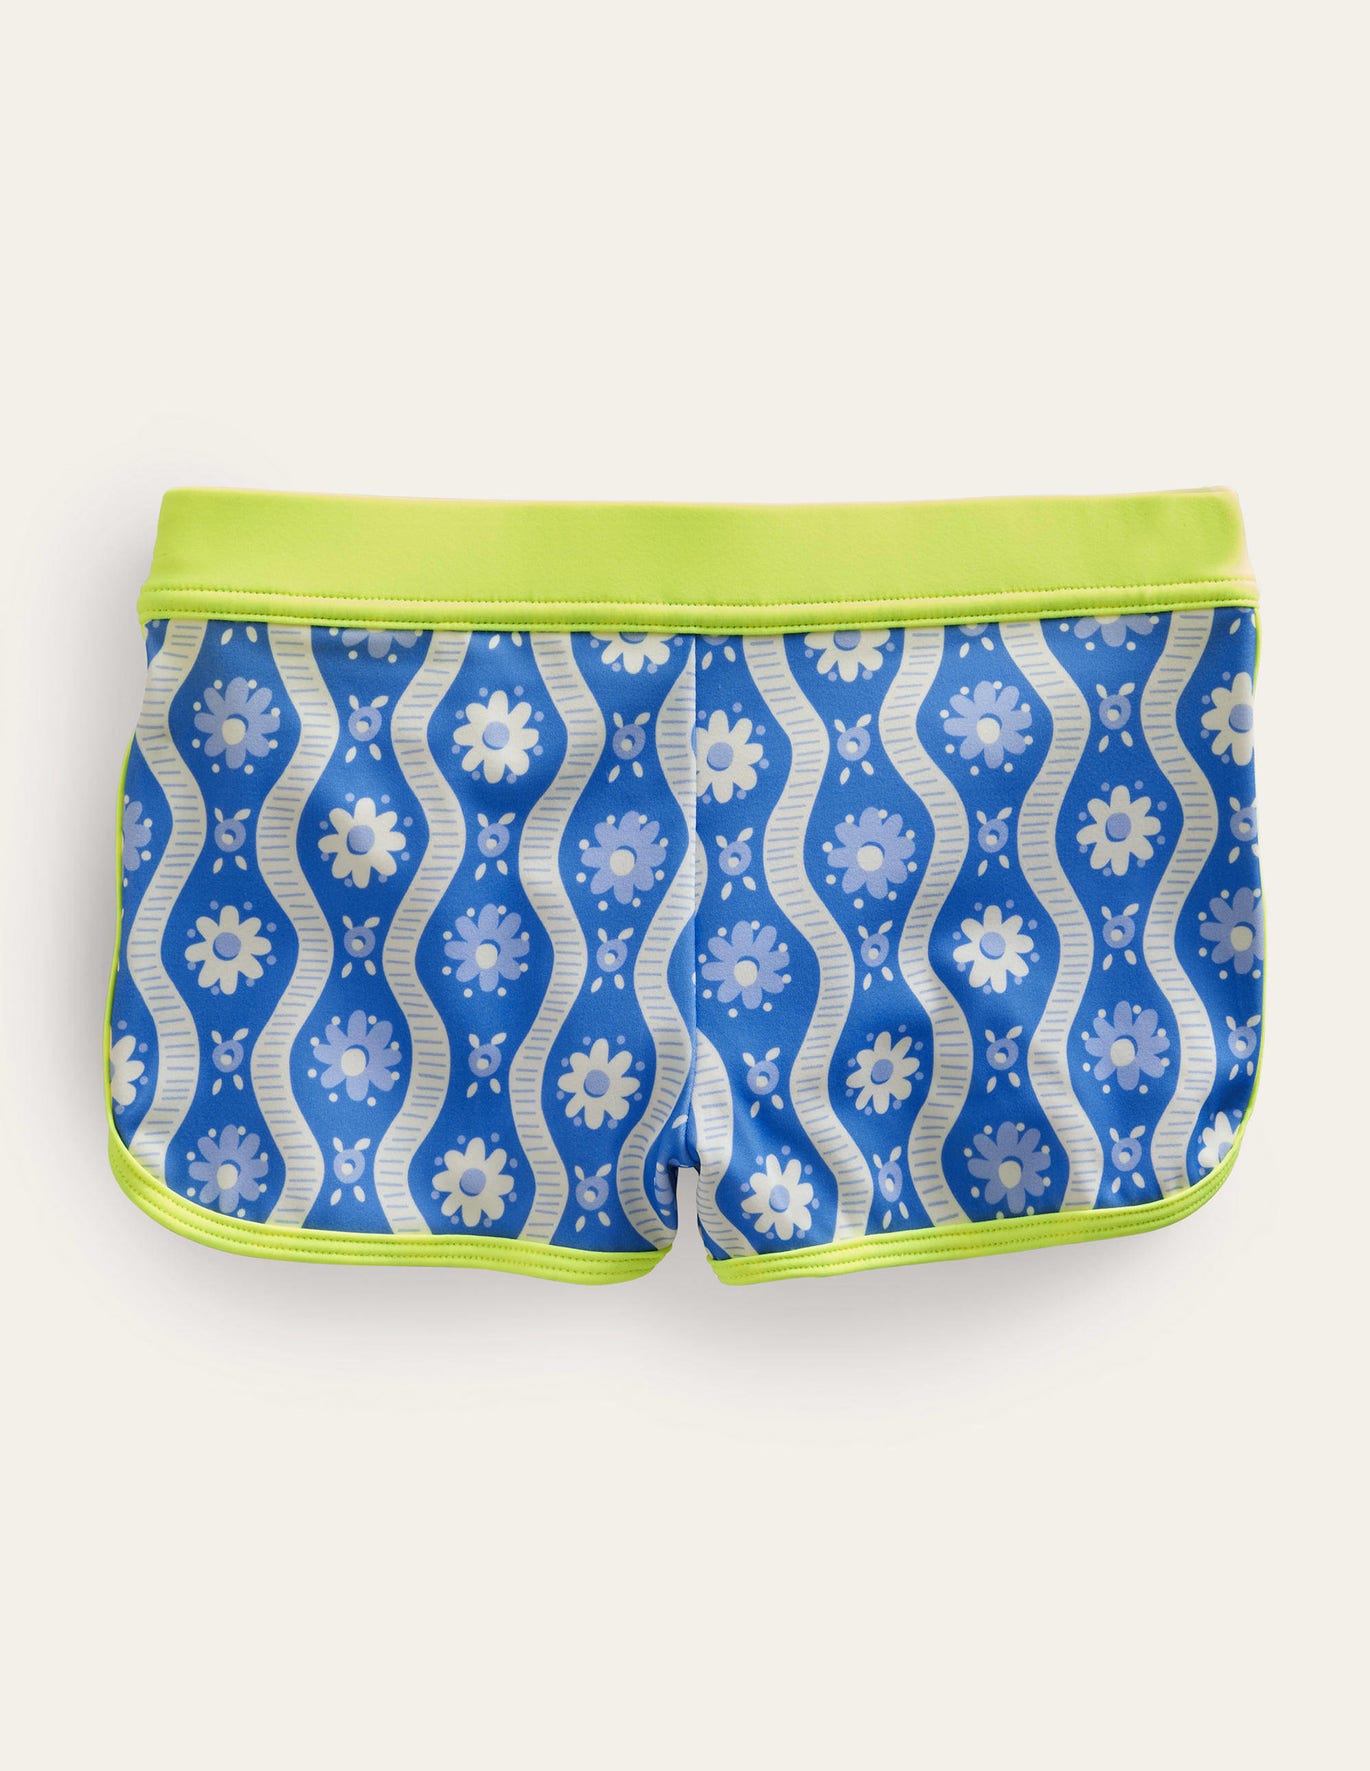 Boden Patterned Swim Shorts - Penzance Blue Daisy Wave